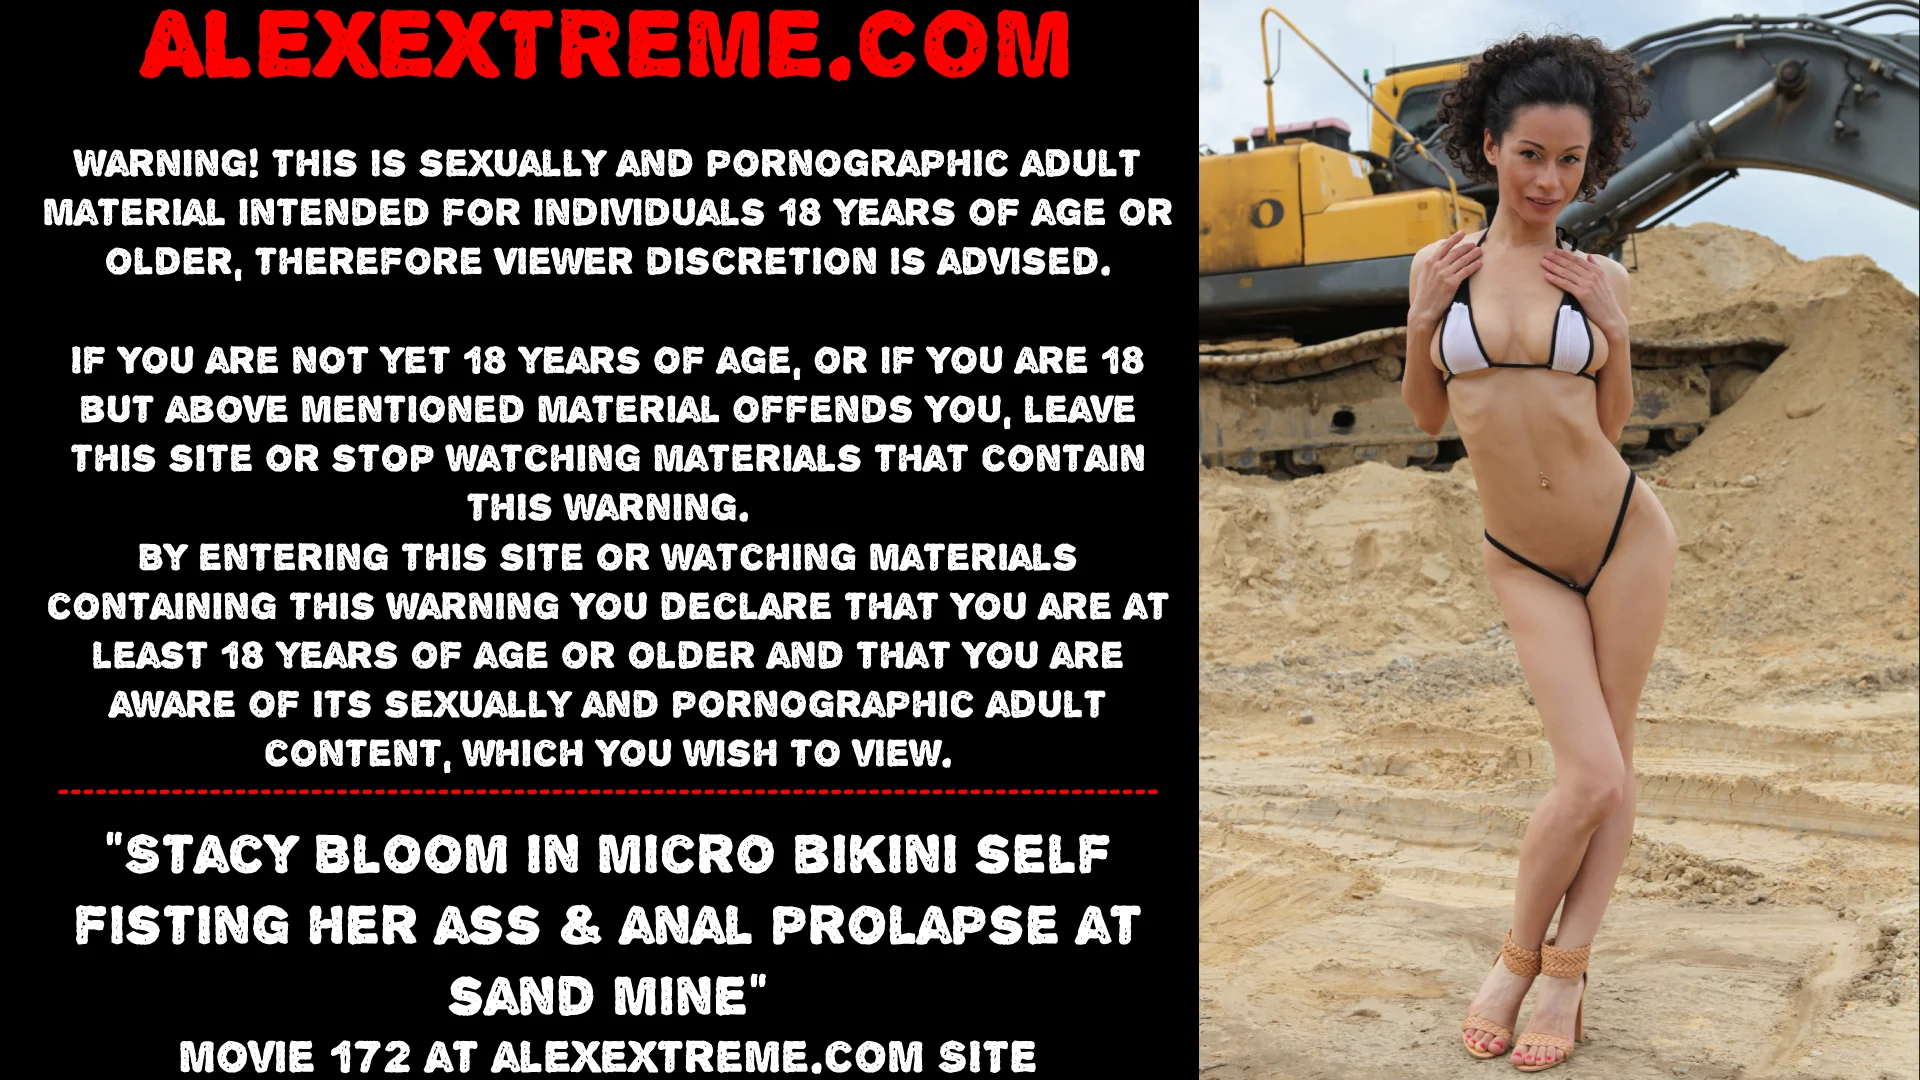 Xtreme Hd Bikini Porn - Stacy Bloom in micro bikini fisting ass & anal prolapse - ThisVid.com